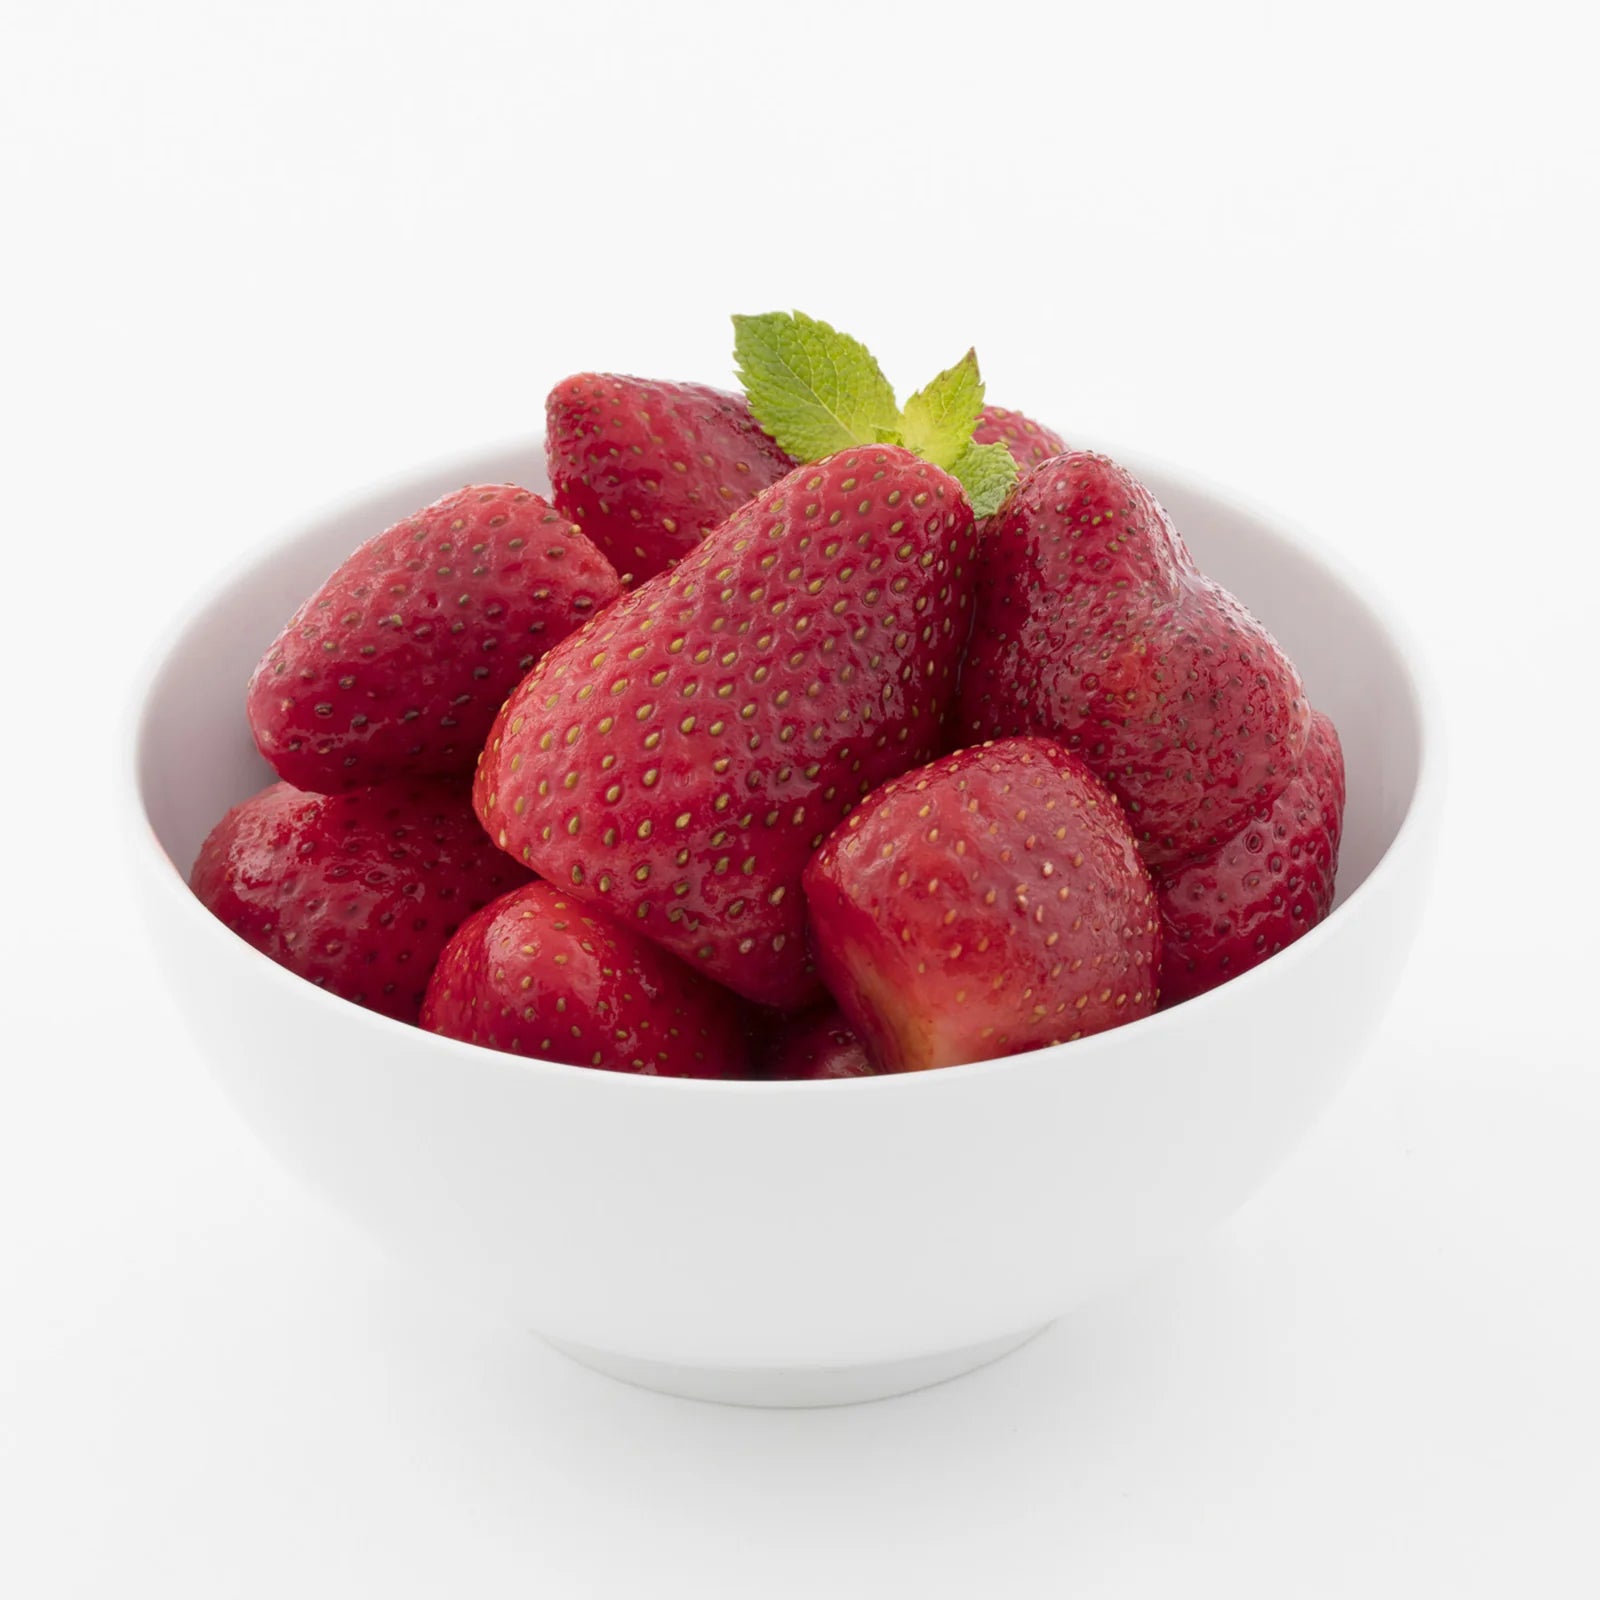 Below Zero - IQF Whole Strawberries